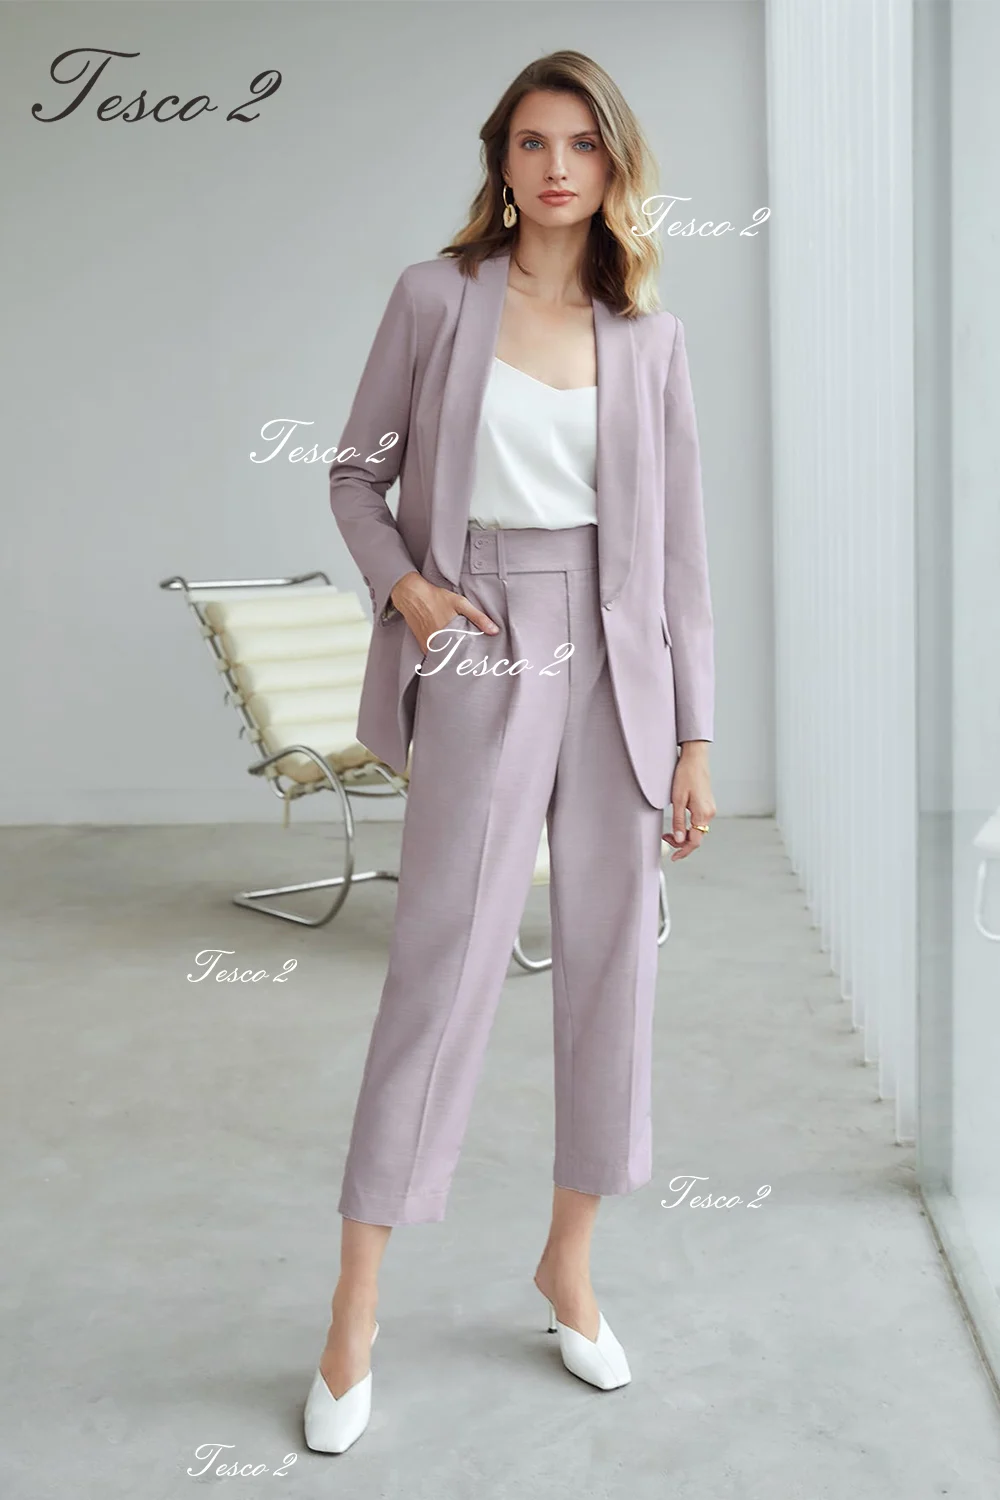 Lilac Colour Women's Suit Chic And Elegant Woman Suit For 2 Piece Jacket Blazer Pants Casual Daily Suit For Spring Autumn